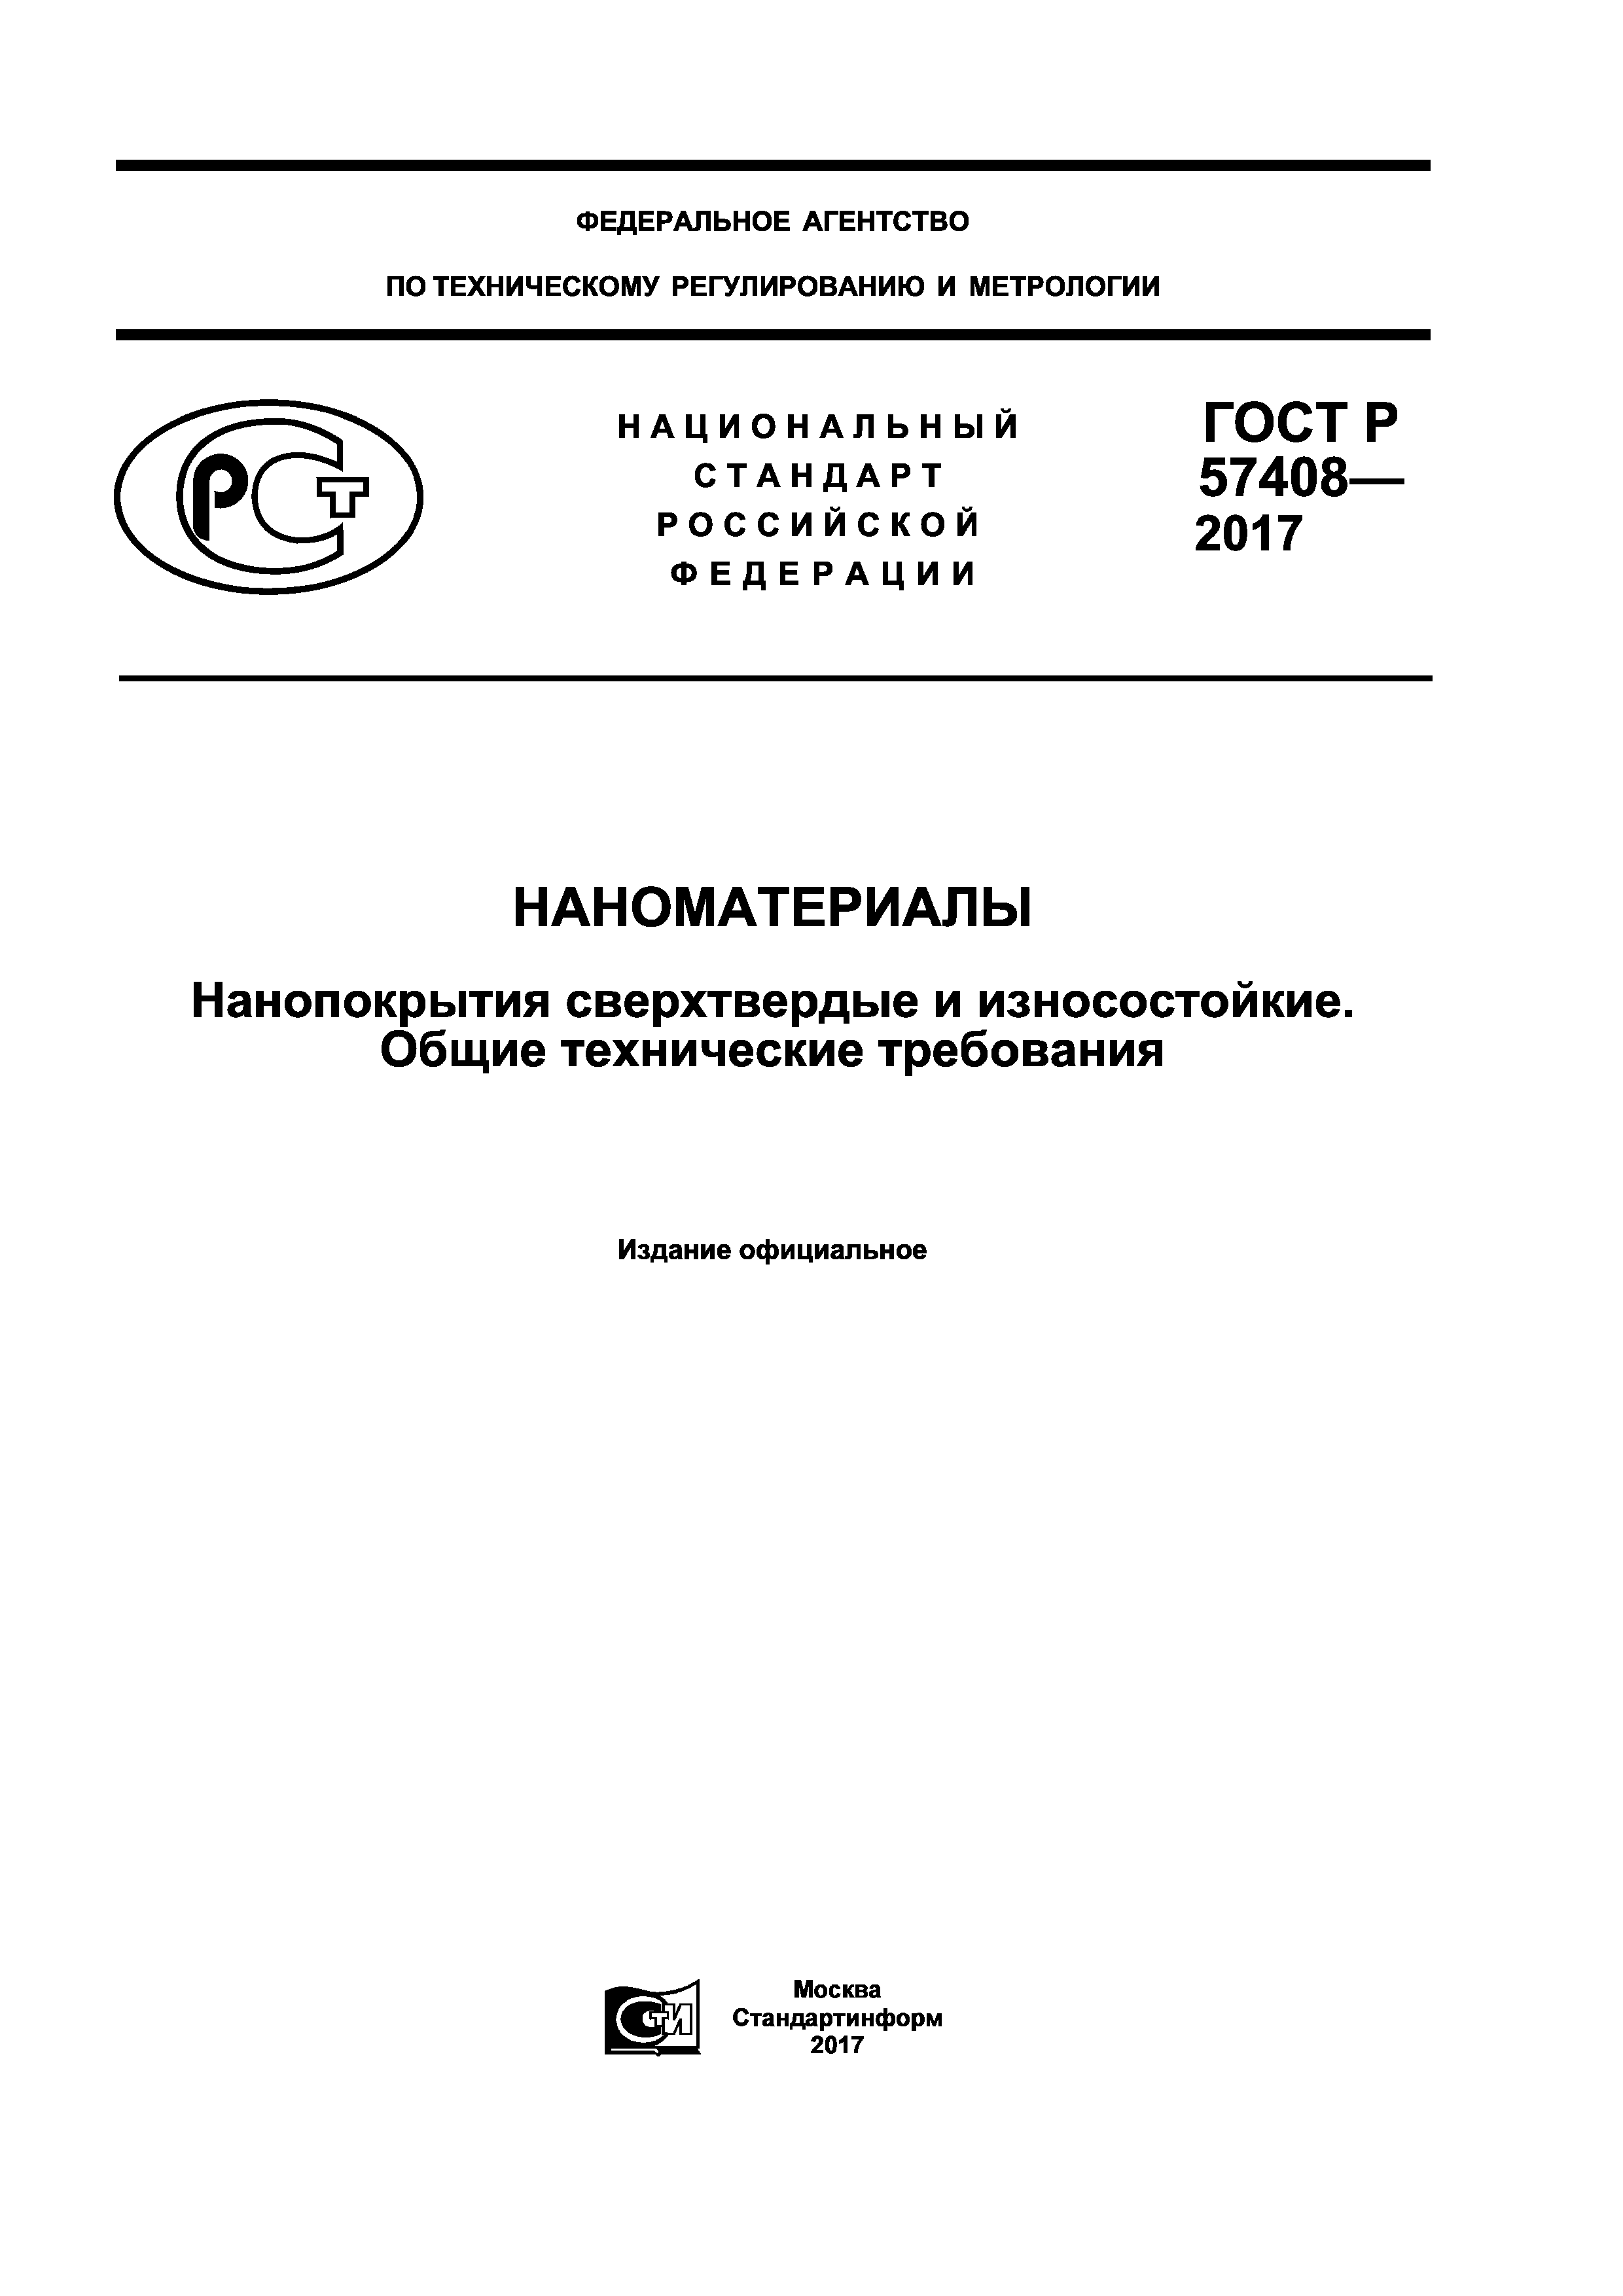 ГОСТ Р 57408-2017